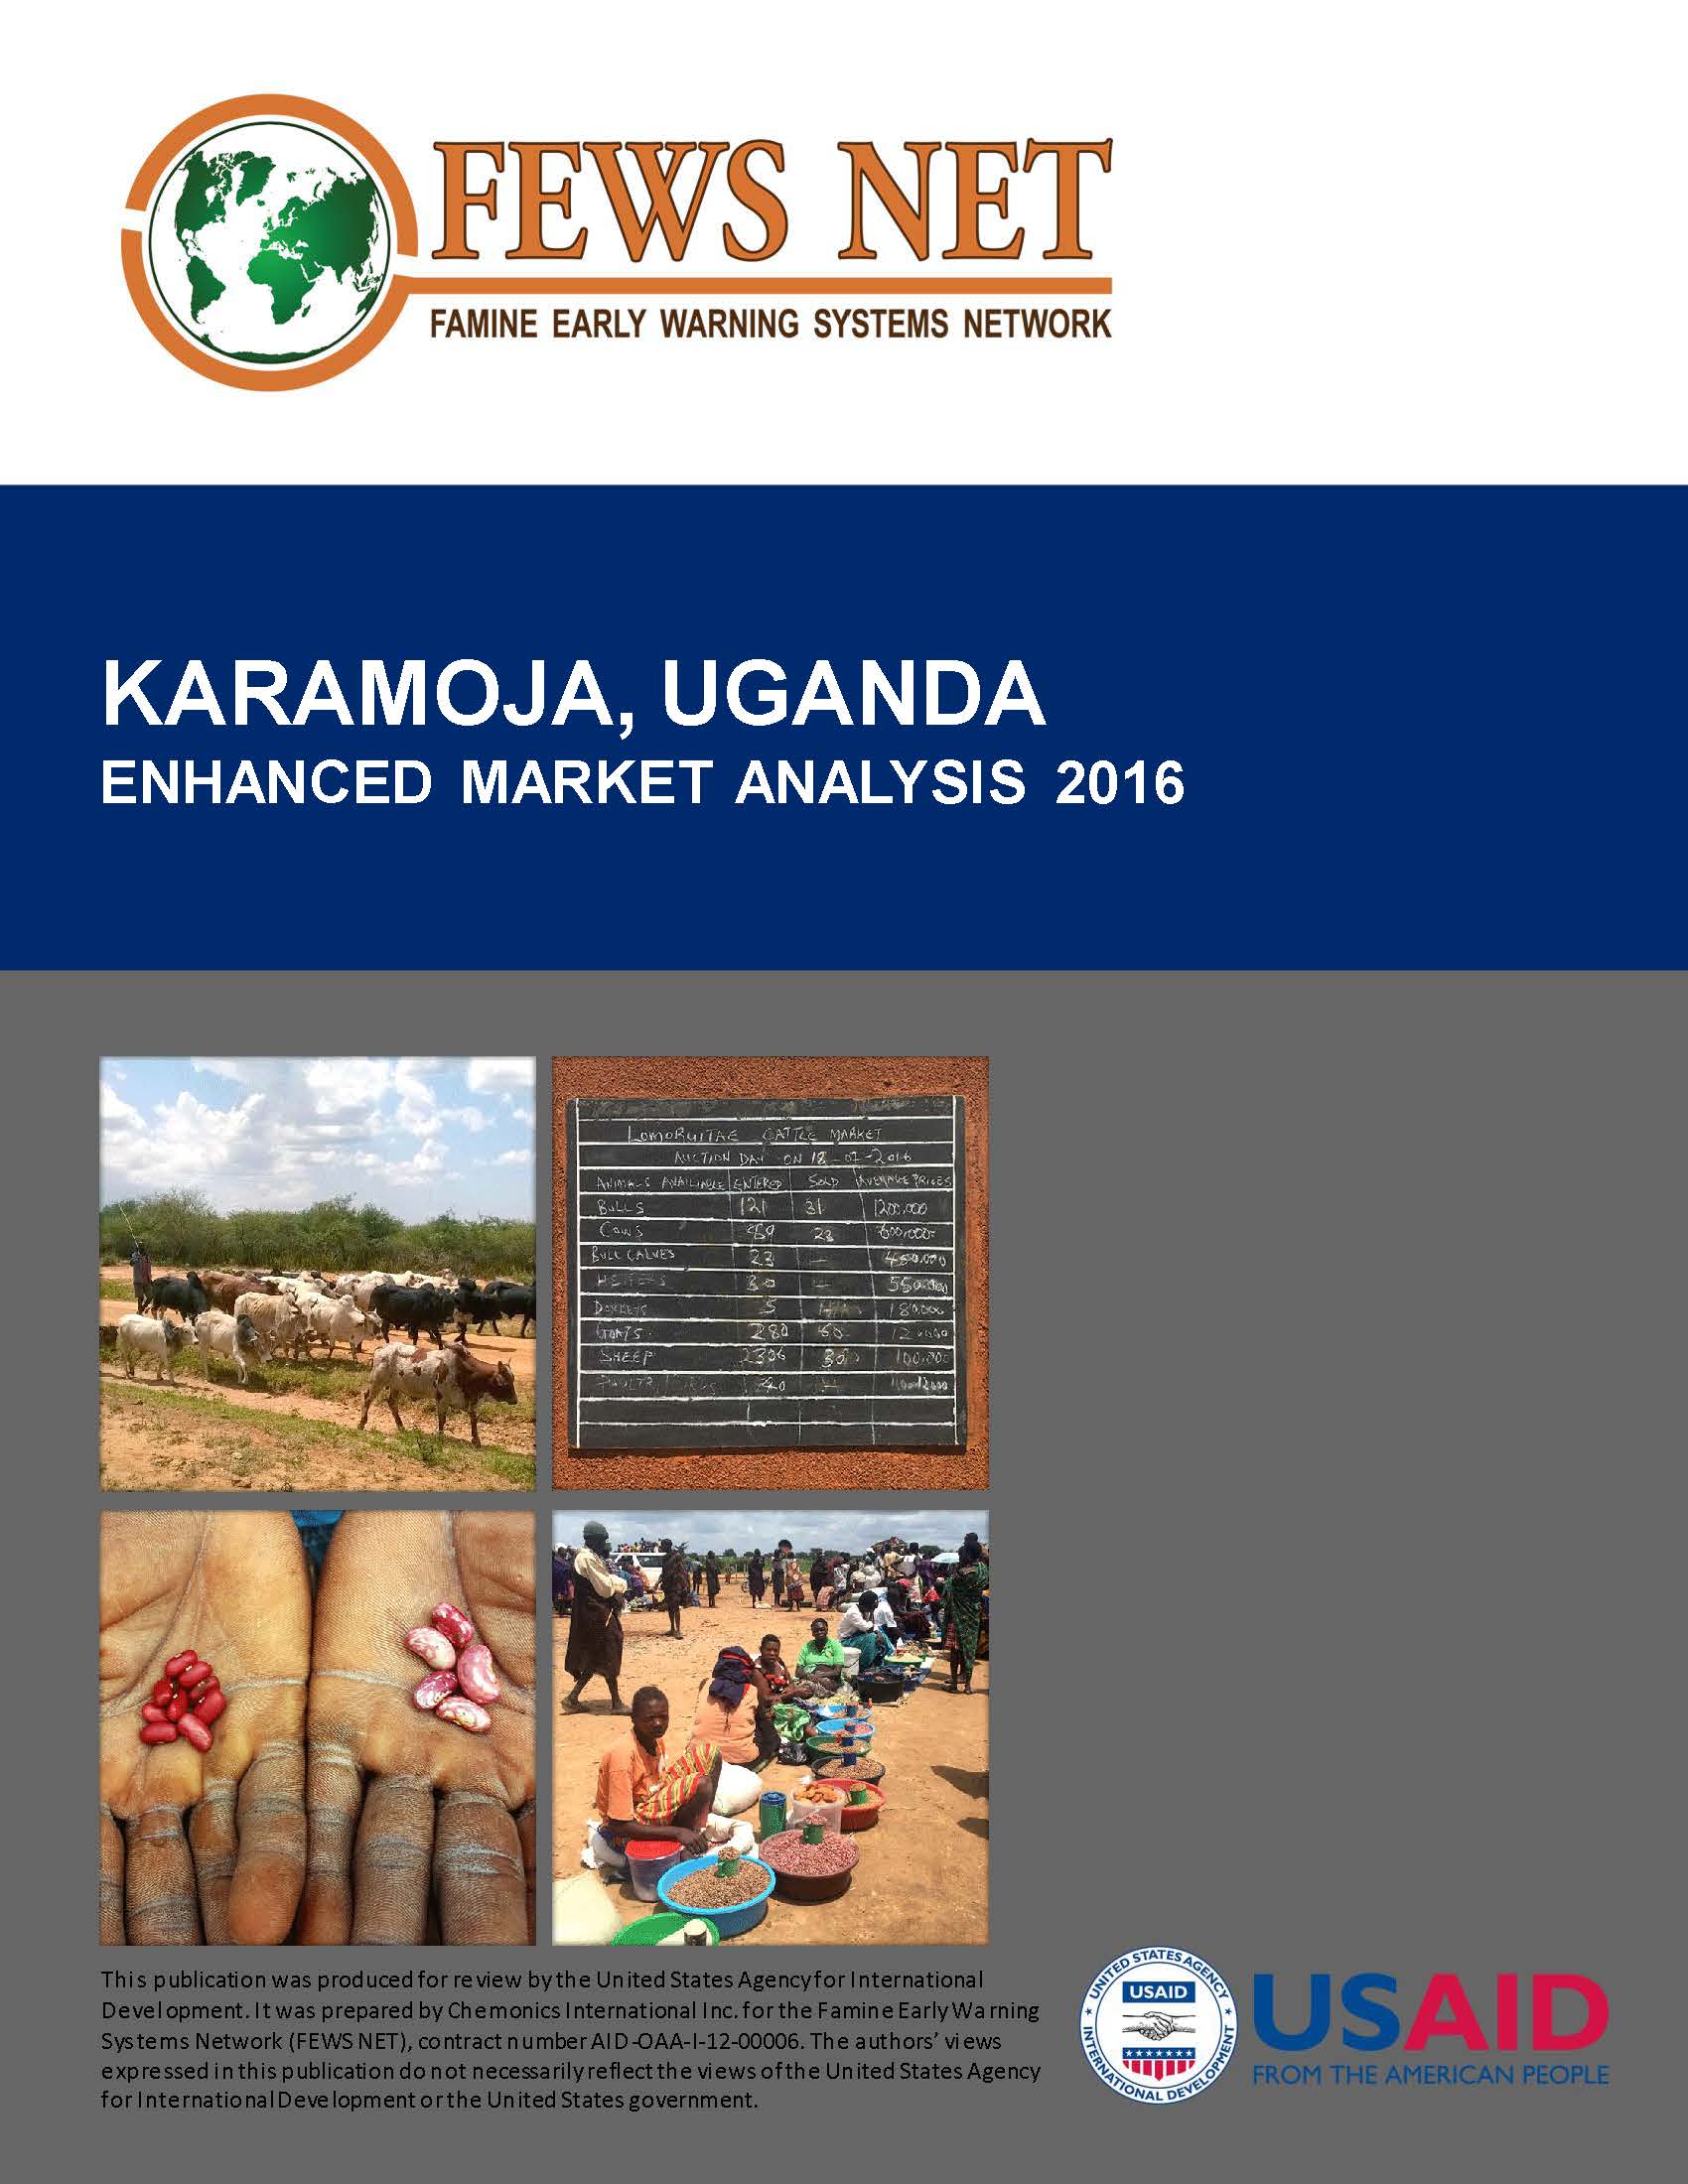 FFP FEWS NET Karamoja, Uganda Enhanced Market Analysis 2016